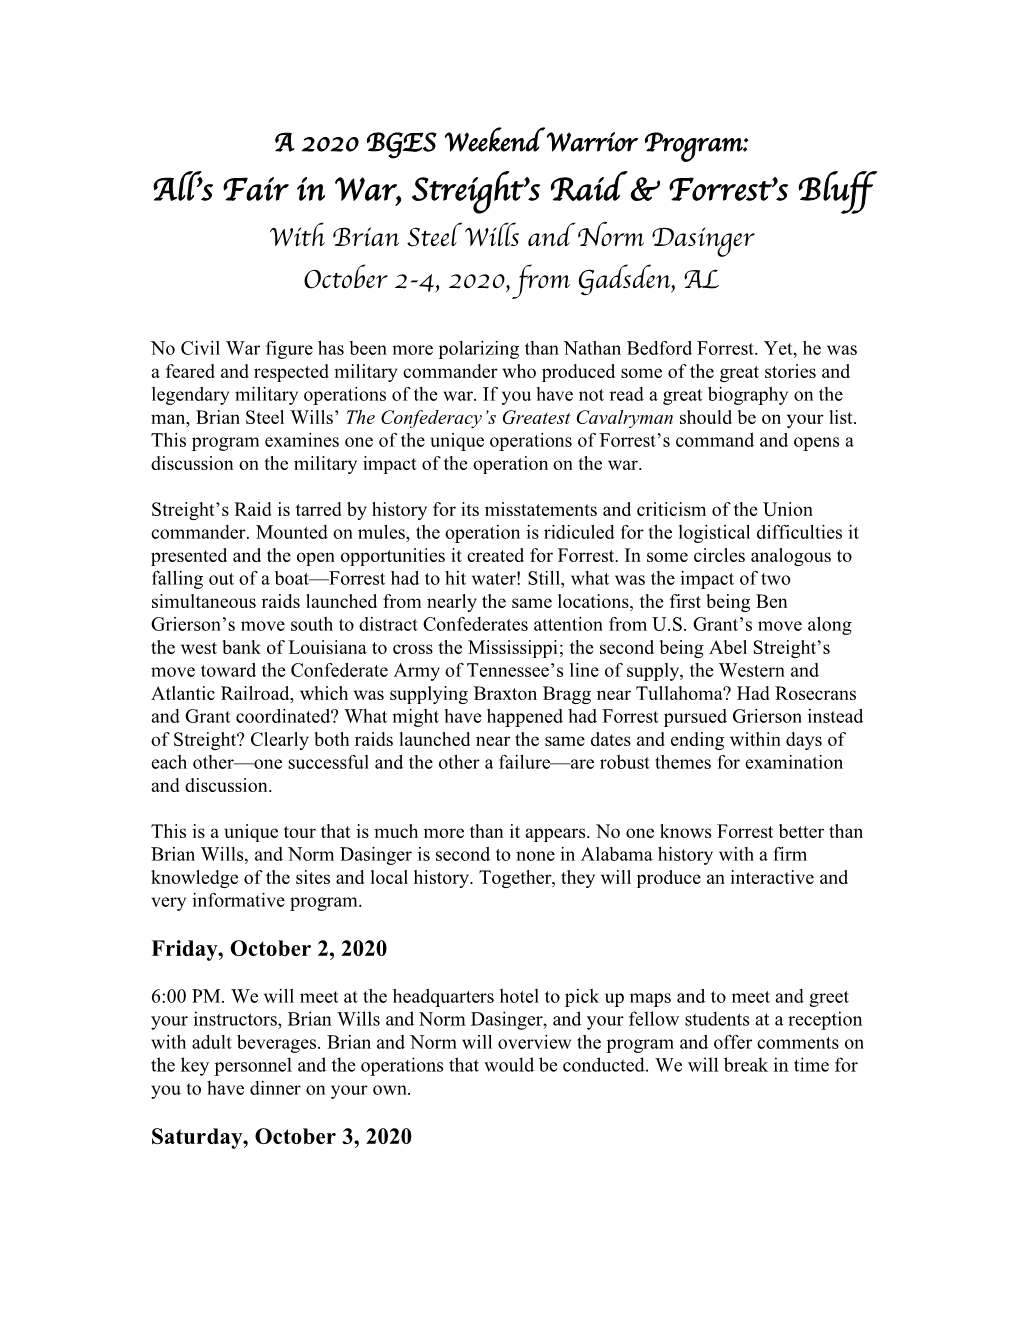 All's Fair in War, Streight's Raid & Forrest's Bluff